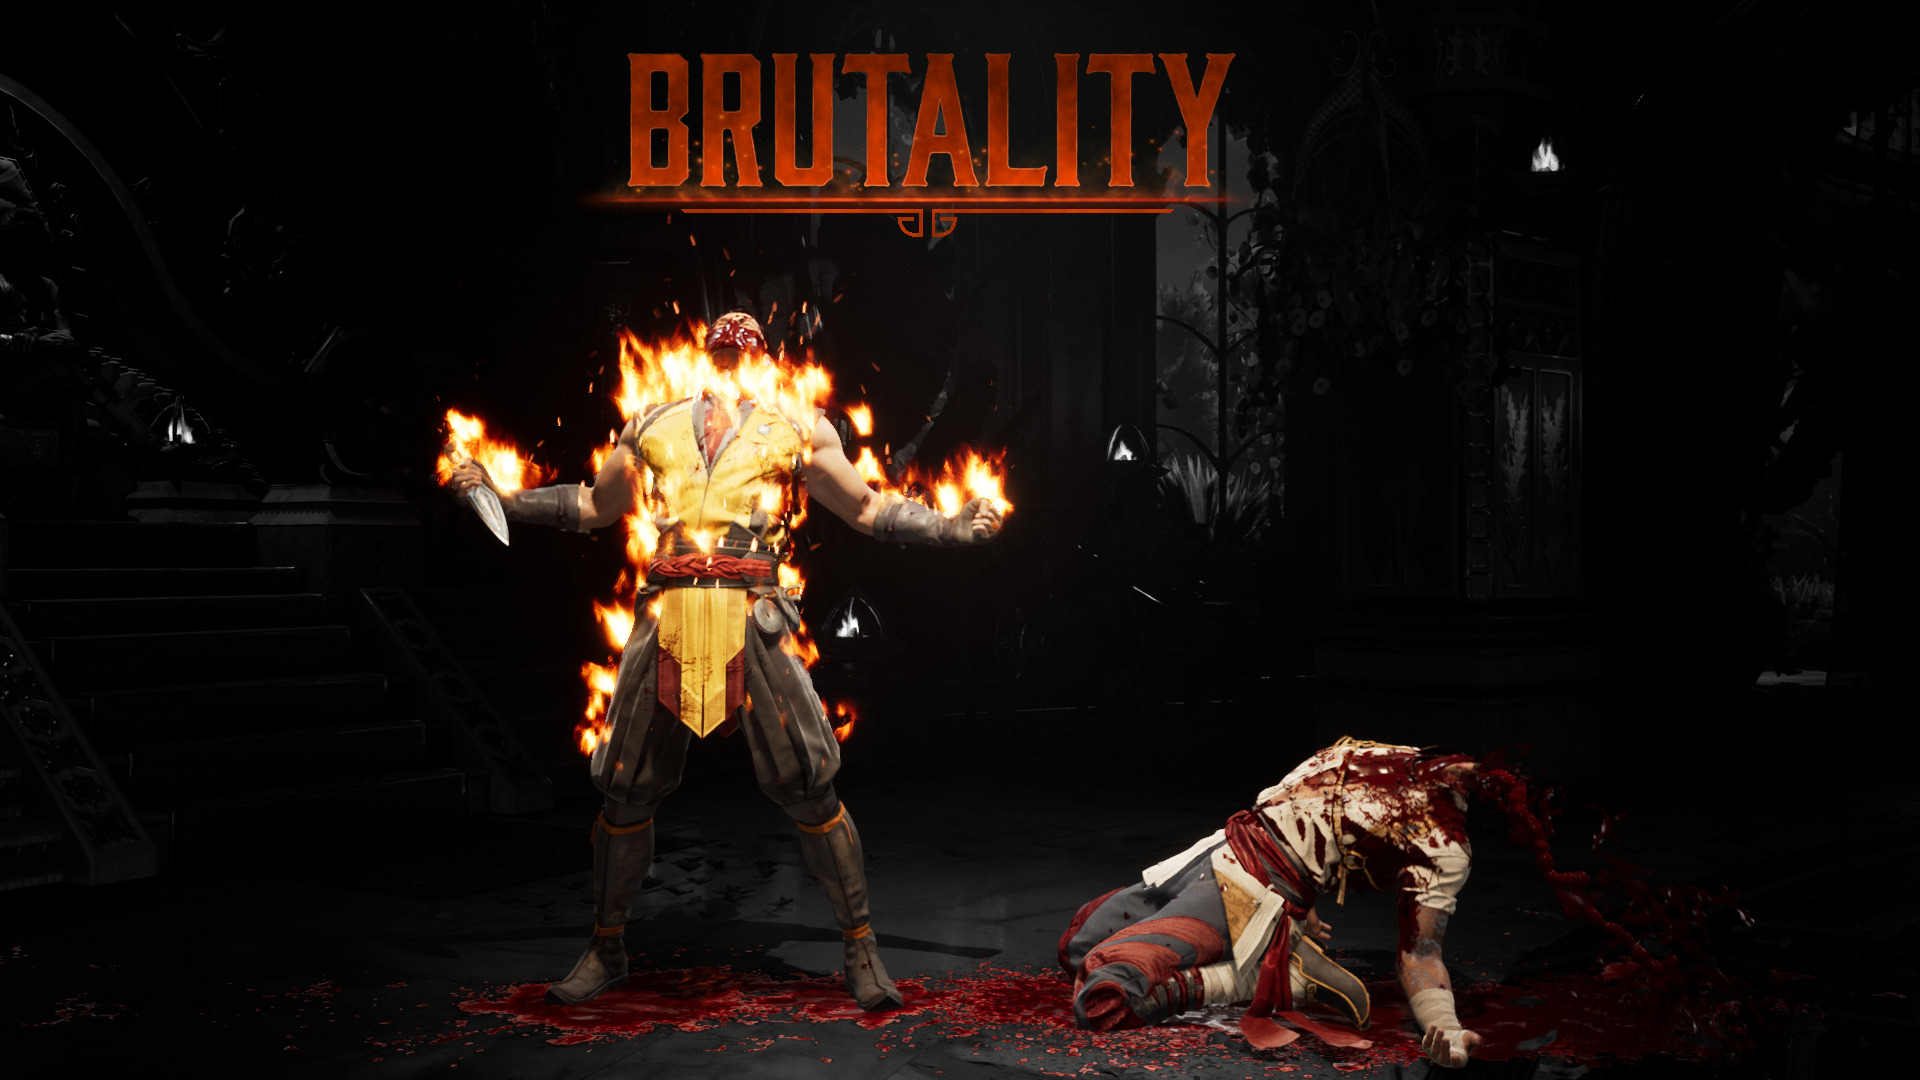 Mortal Kombat All Fatalities and Brutalities  MK Mobile All Brutalities  and Fatalities 